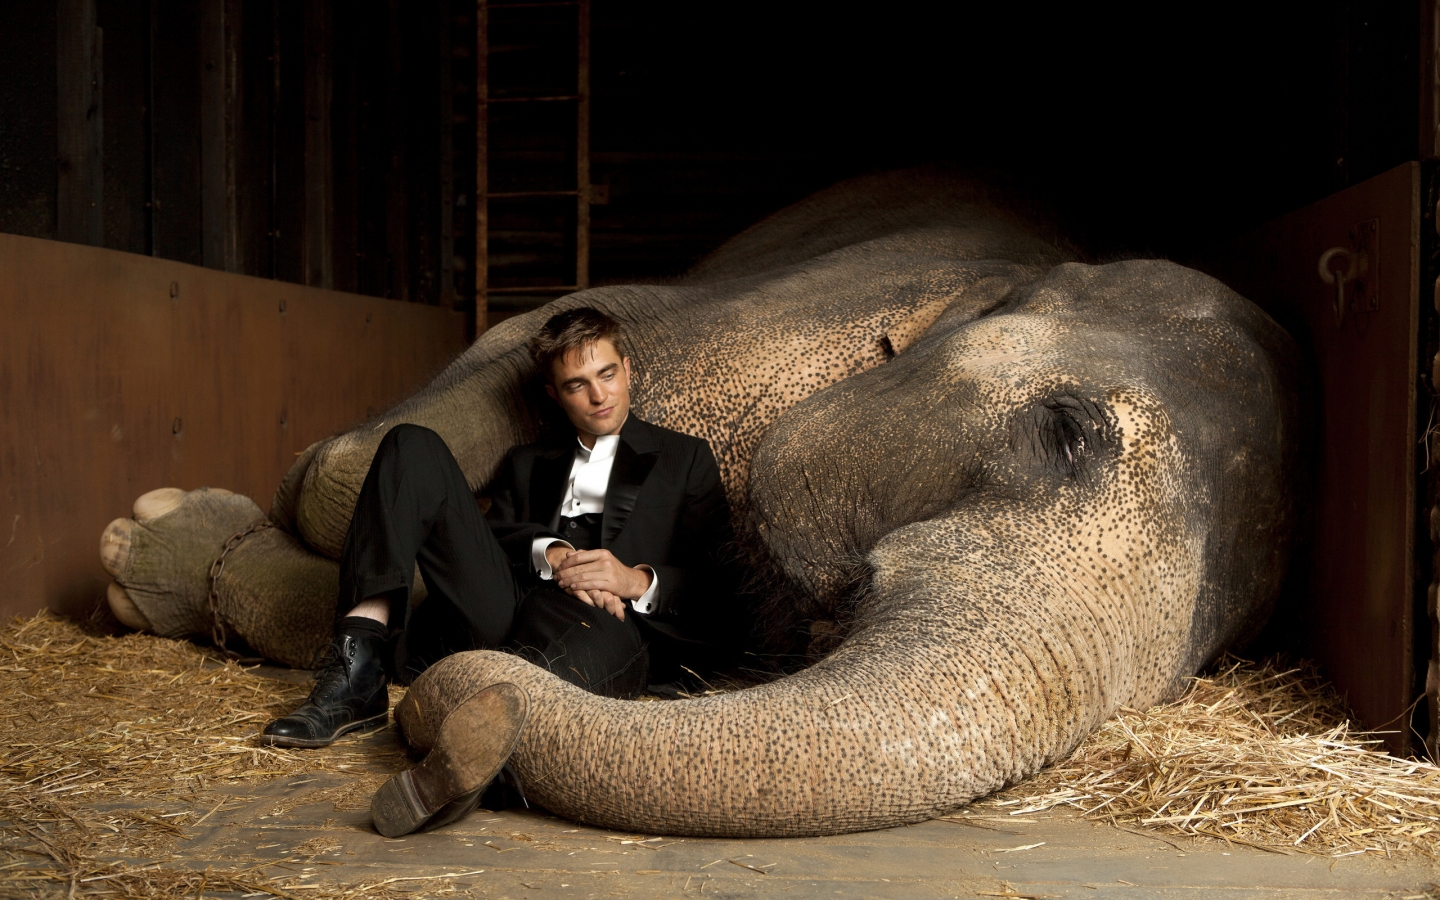 Robert Pattinson Close to Elephant for 1440 x 900 widescreen resolution